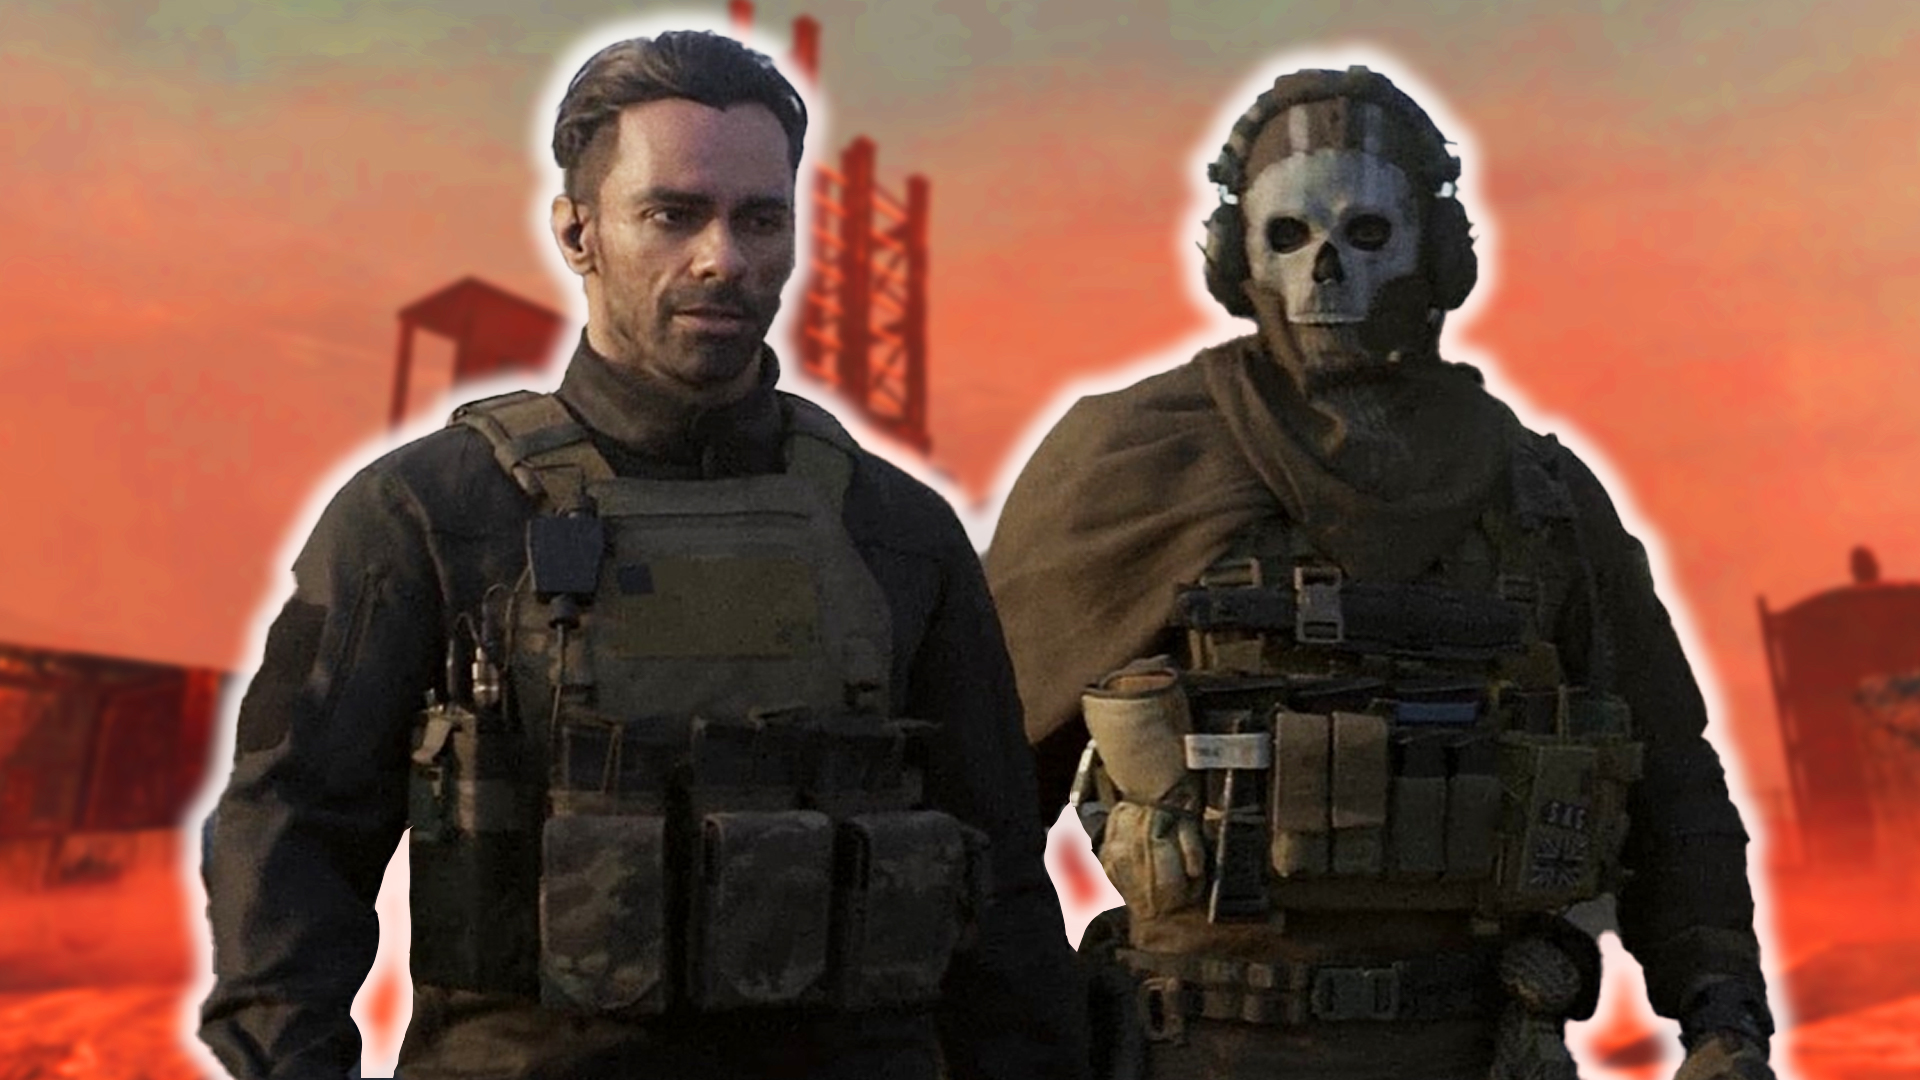 Call of Duty: Modern Warfare 2 Map is Seemingly Based on Original CoD